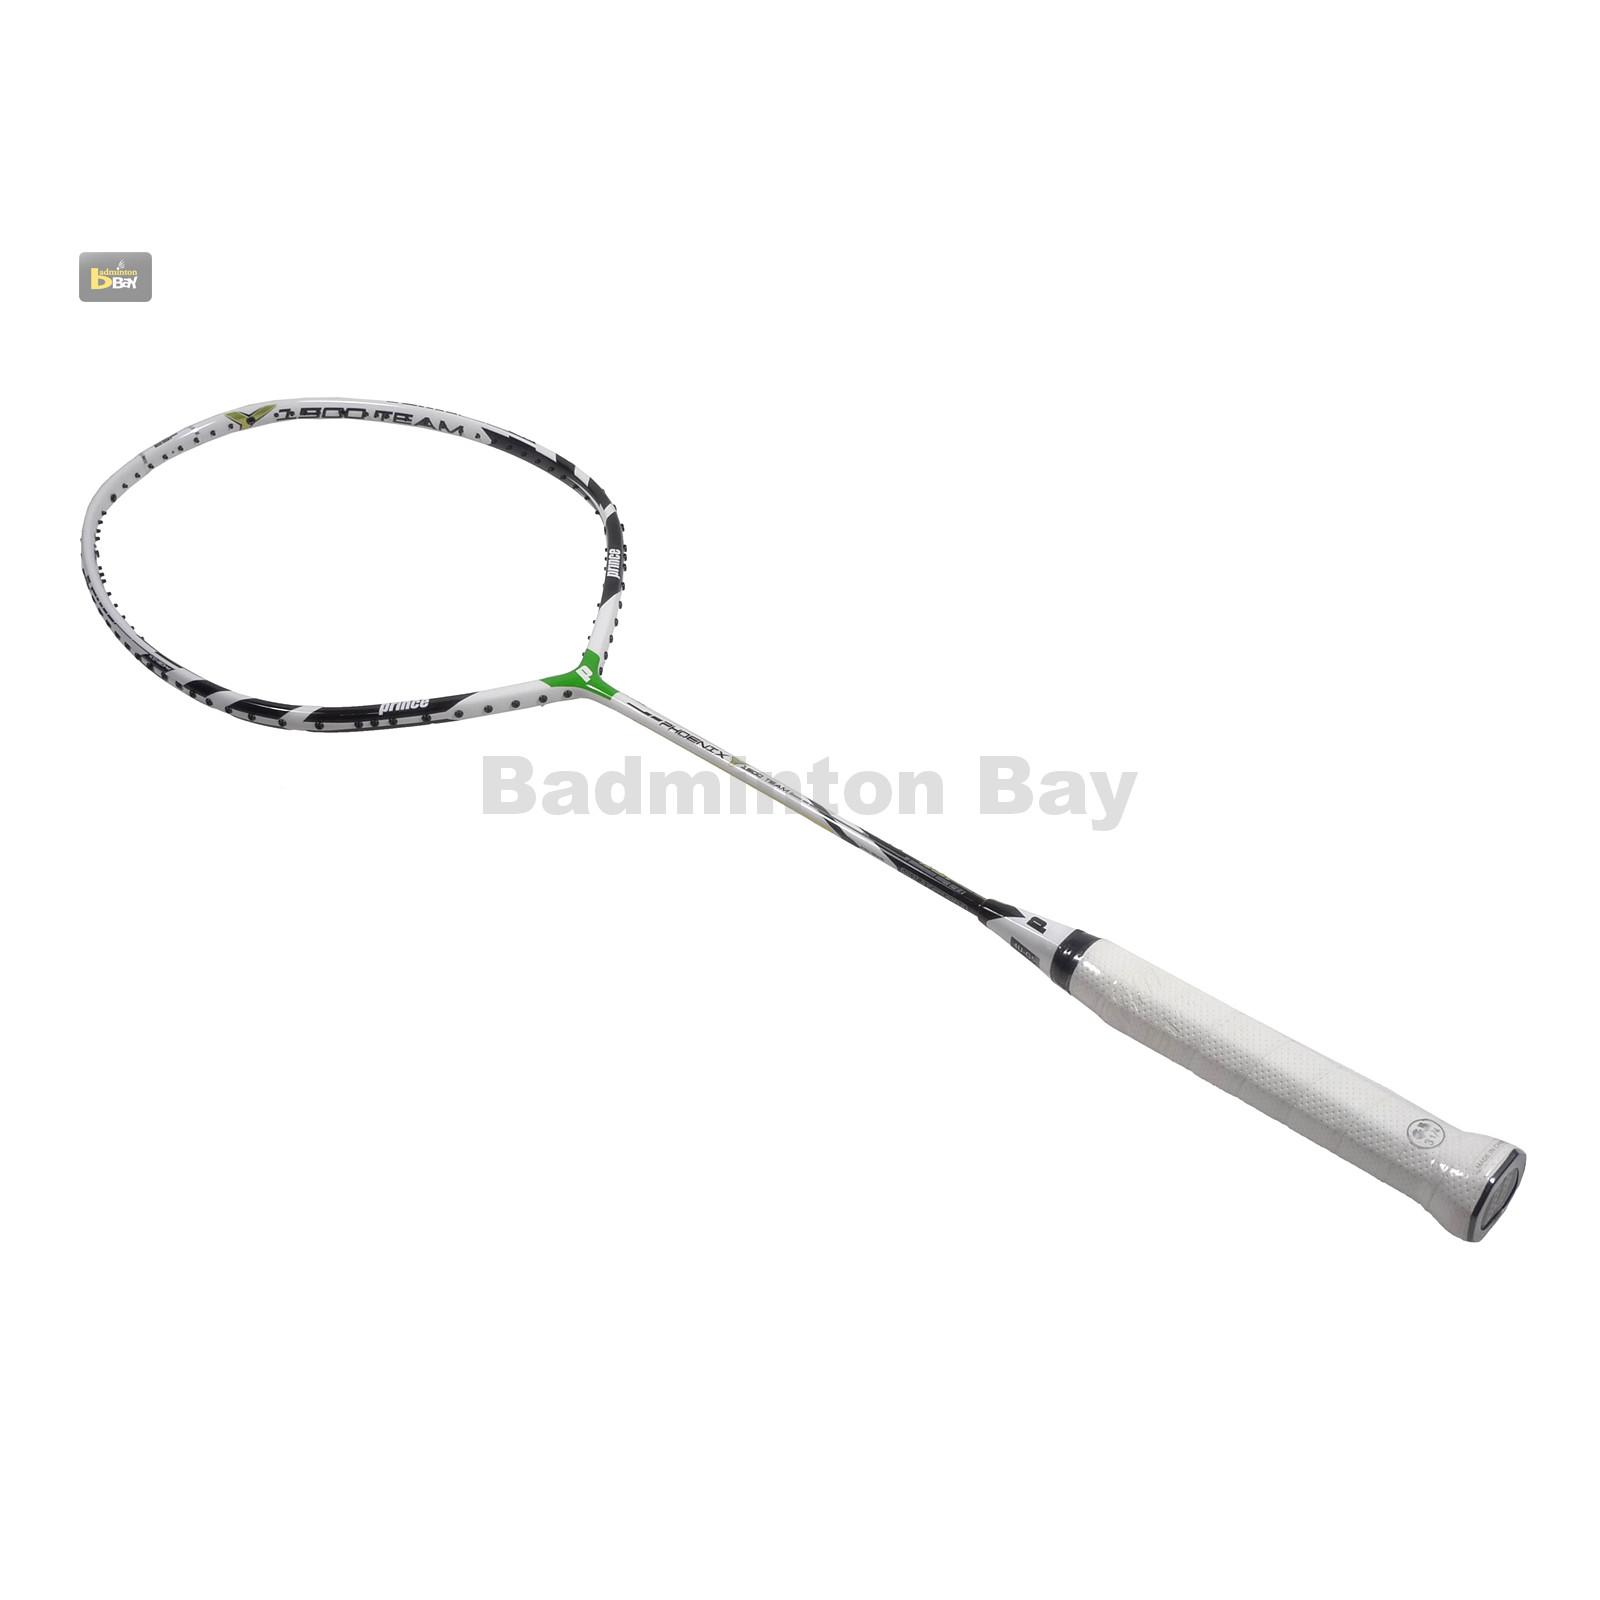 prince badminton racket price